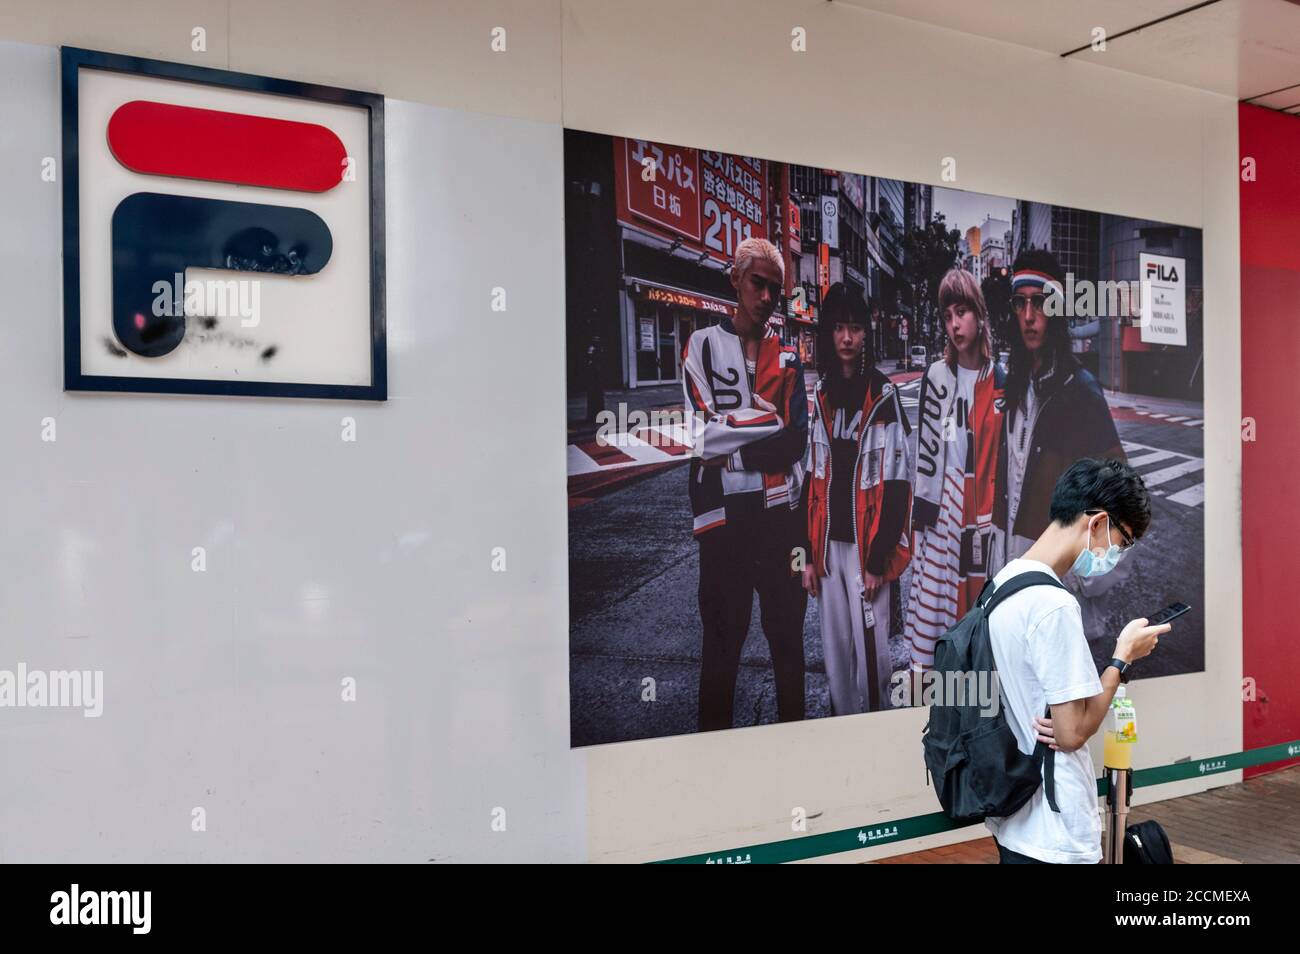 Italienische Sportartikel Marke Fila Geschäft in Hongkong gesehen  Stockfotografie - Alamy